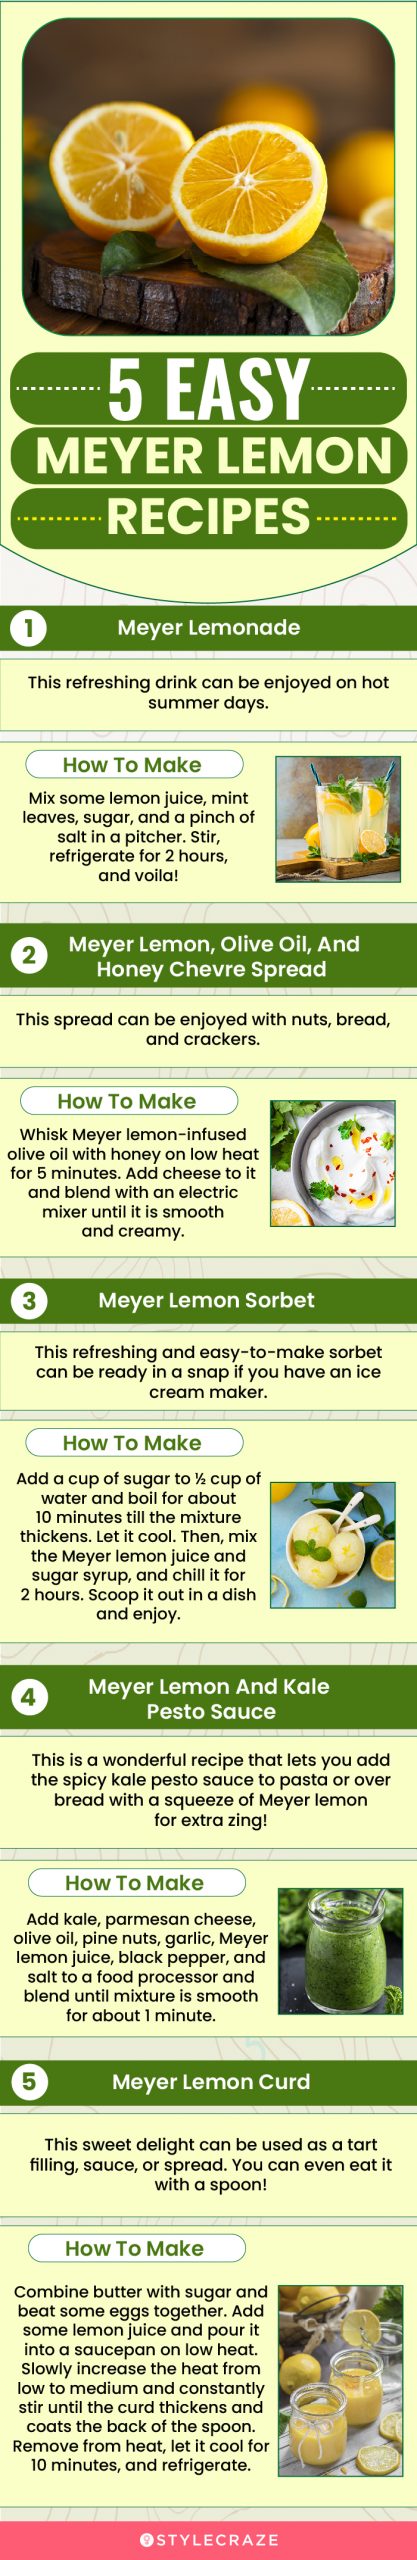 most easy meyer lemon recipes (infographic)